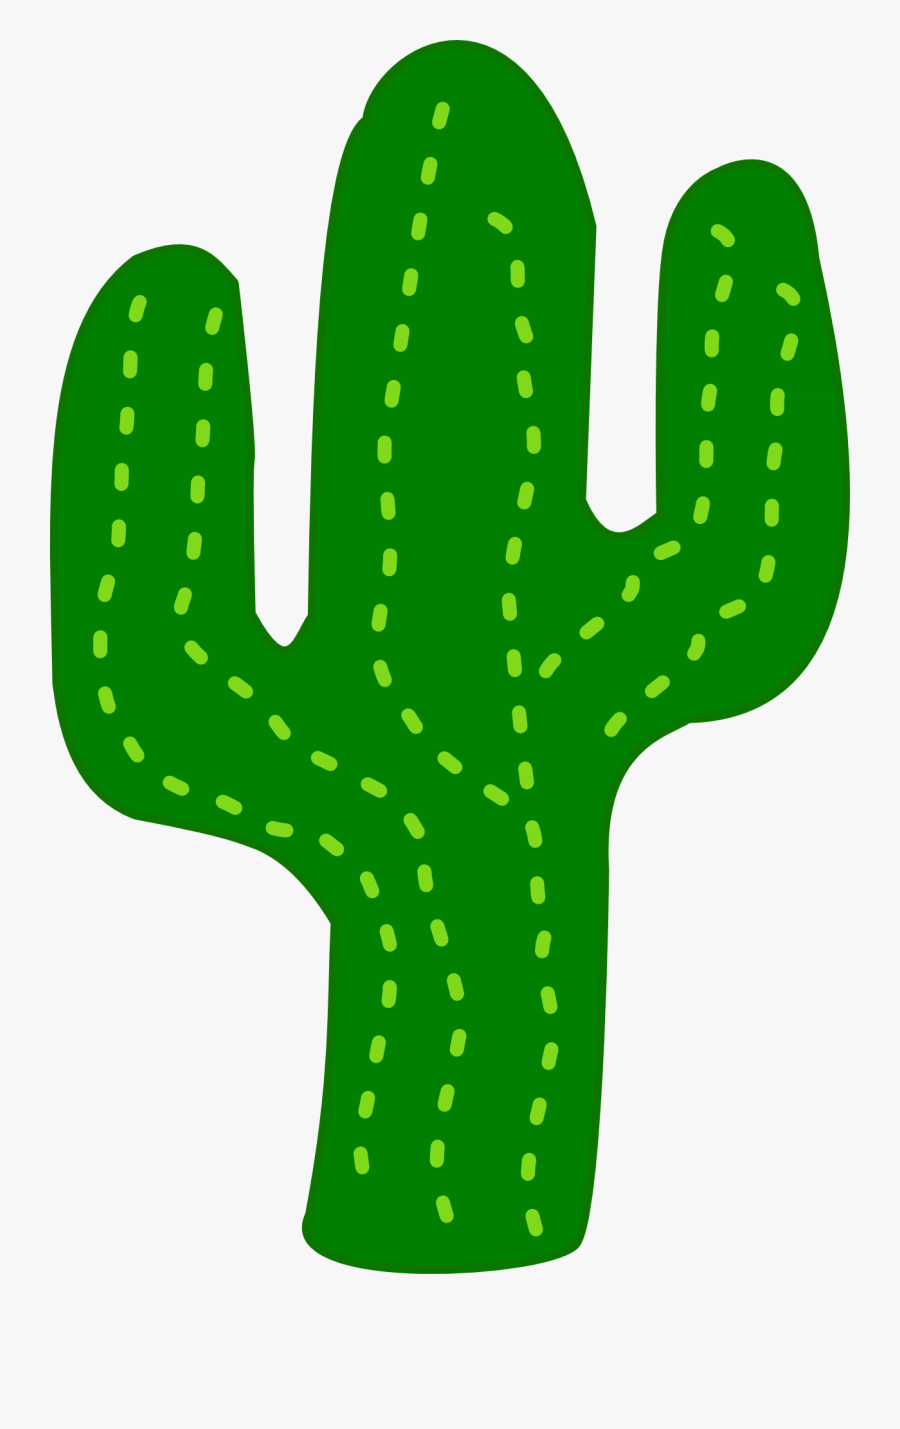 Cactus Clipart Free Cactus Clip Art At Clker Vector - Cactus Mexicano Png, Transparent Clipart